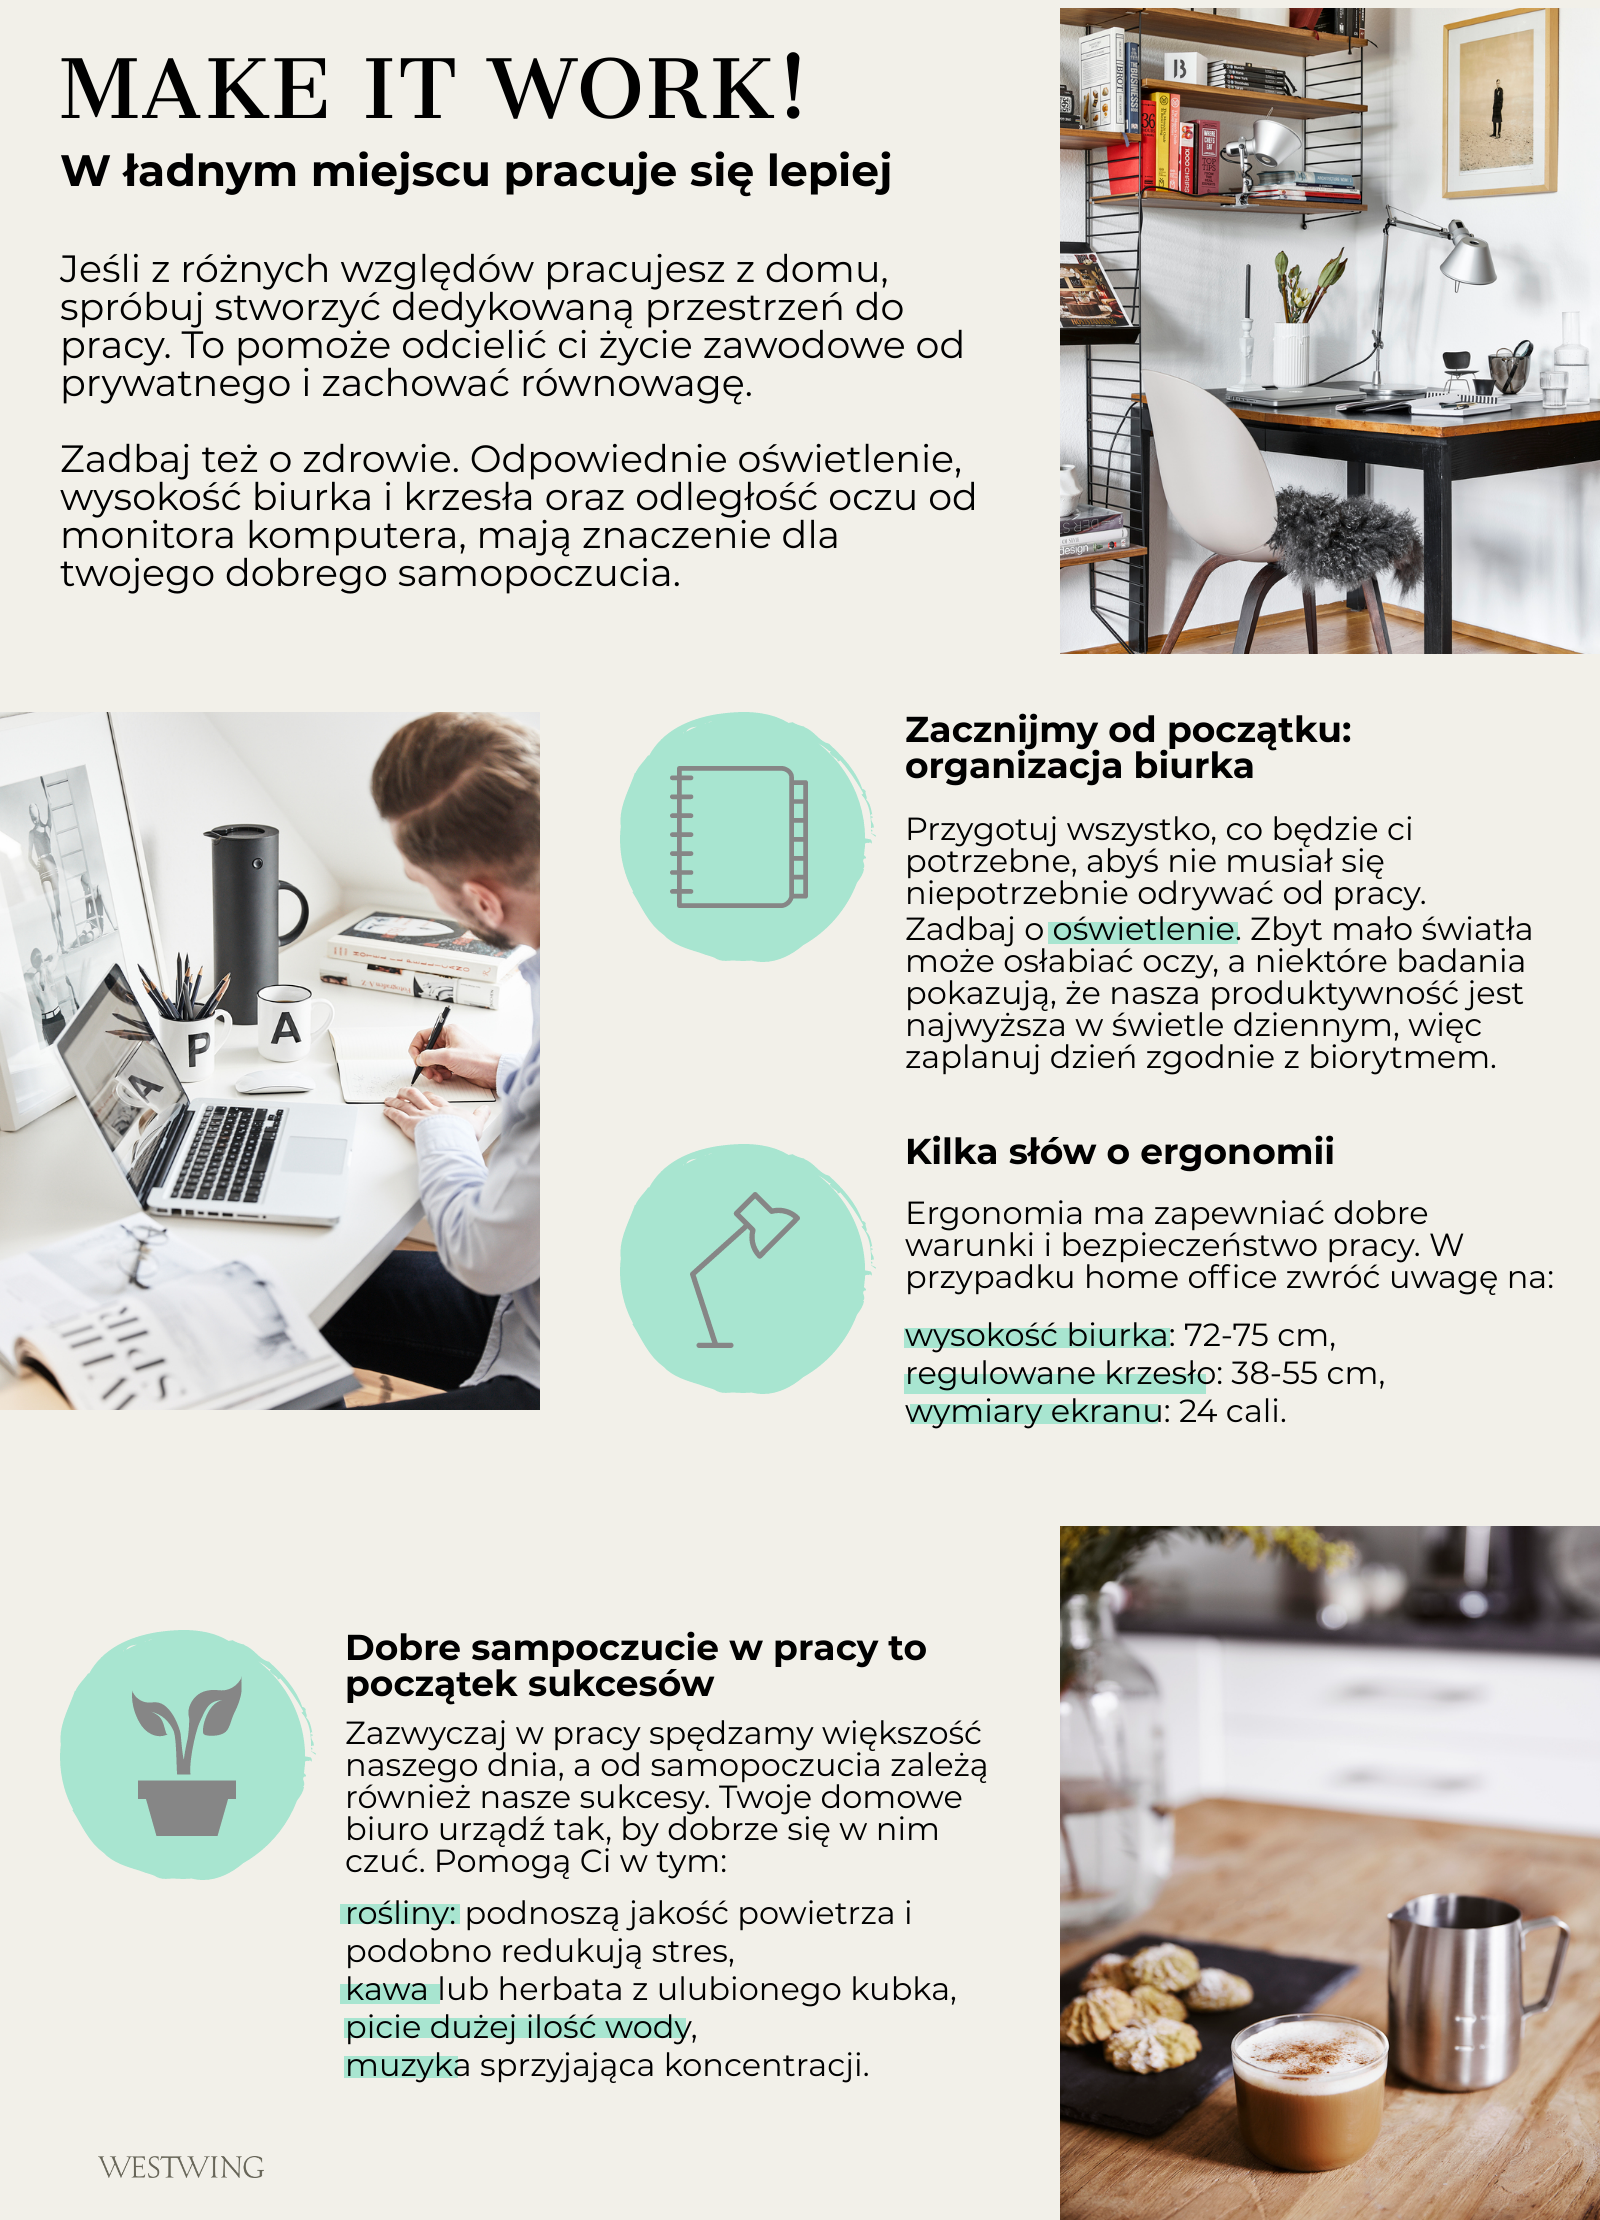 Home office – poznaj 7 zasad zdrowej i skutecznej pracy z domu 